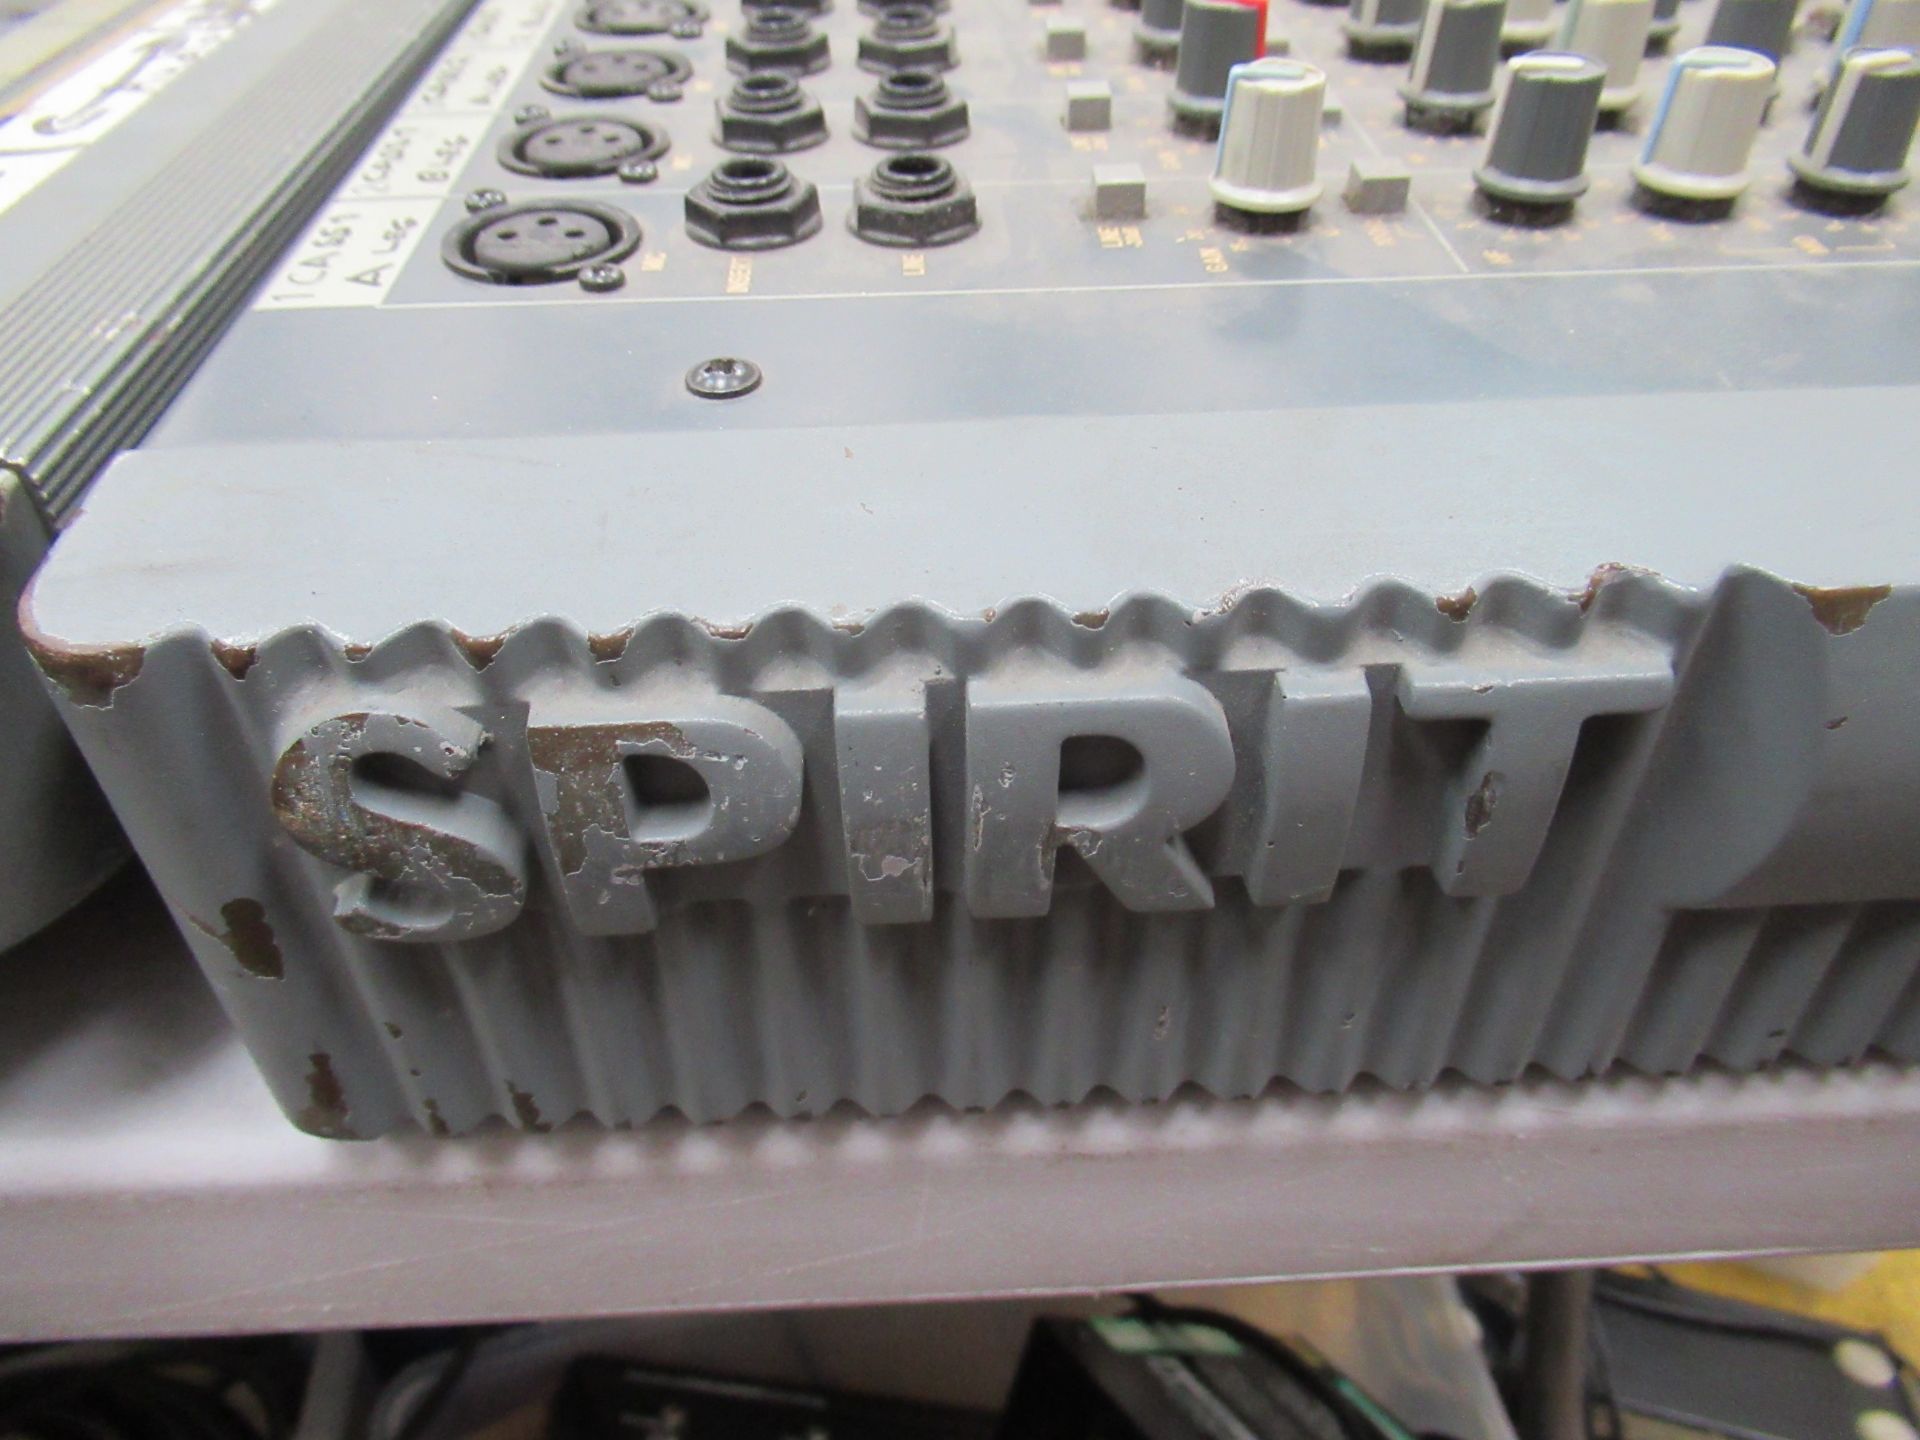 Spirit live mixing deck - Image 5 of 5